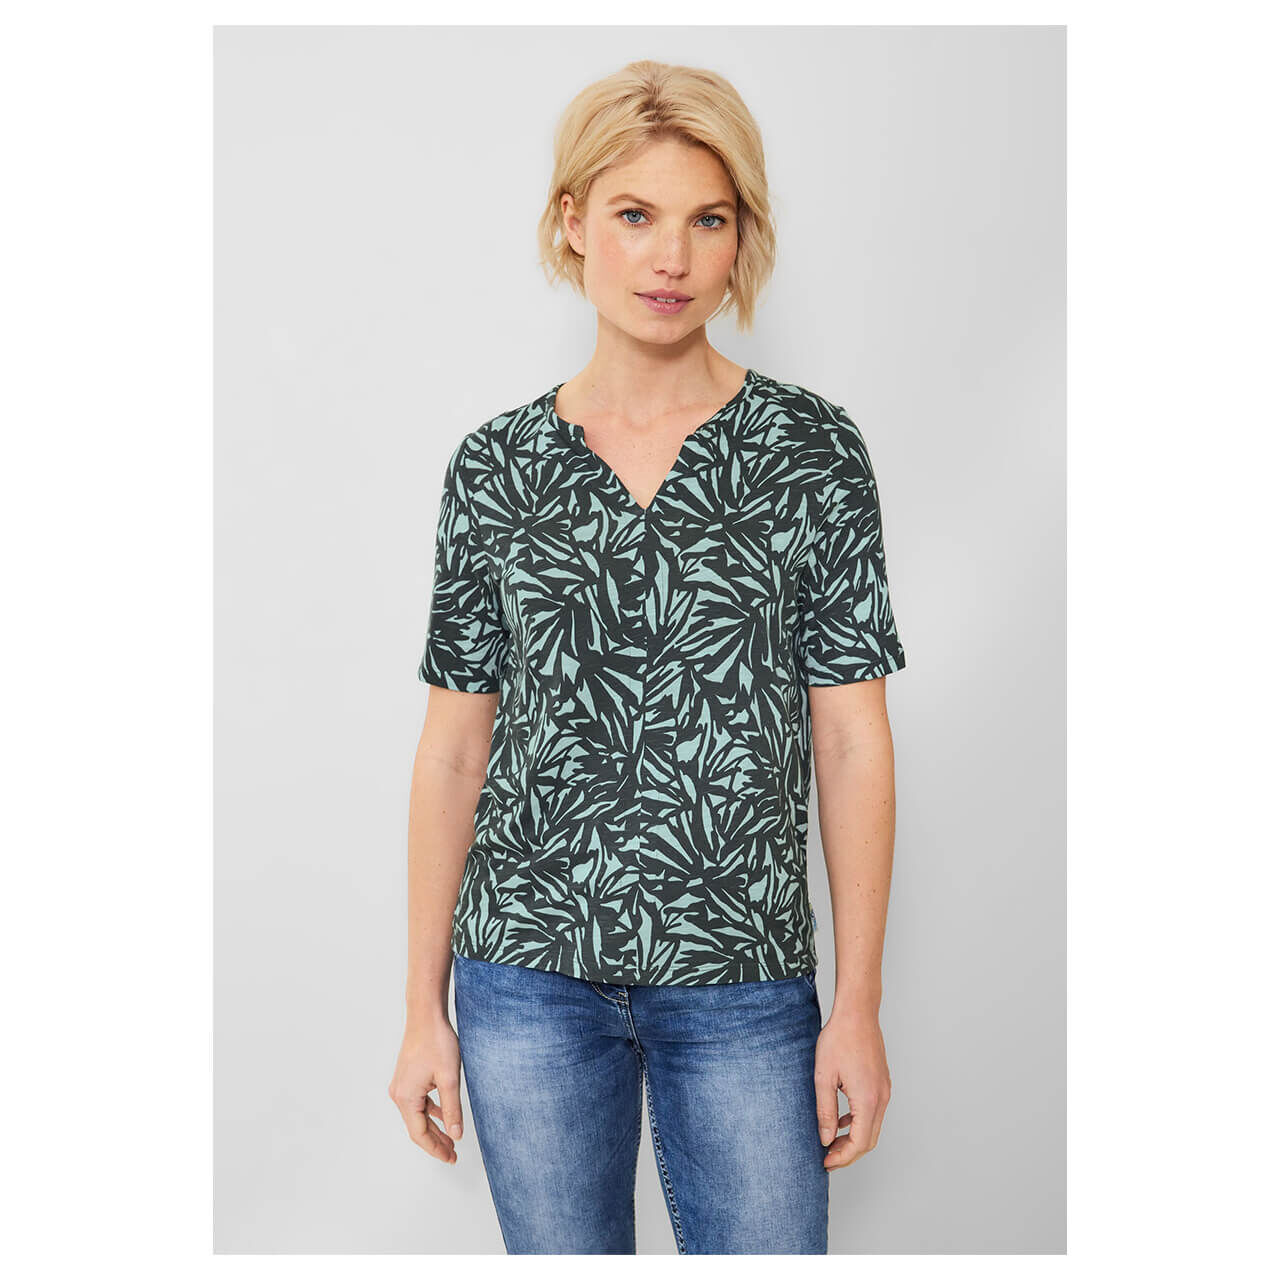 Cecil Tunic T-Shirt easy khaki print